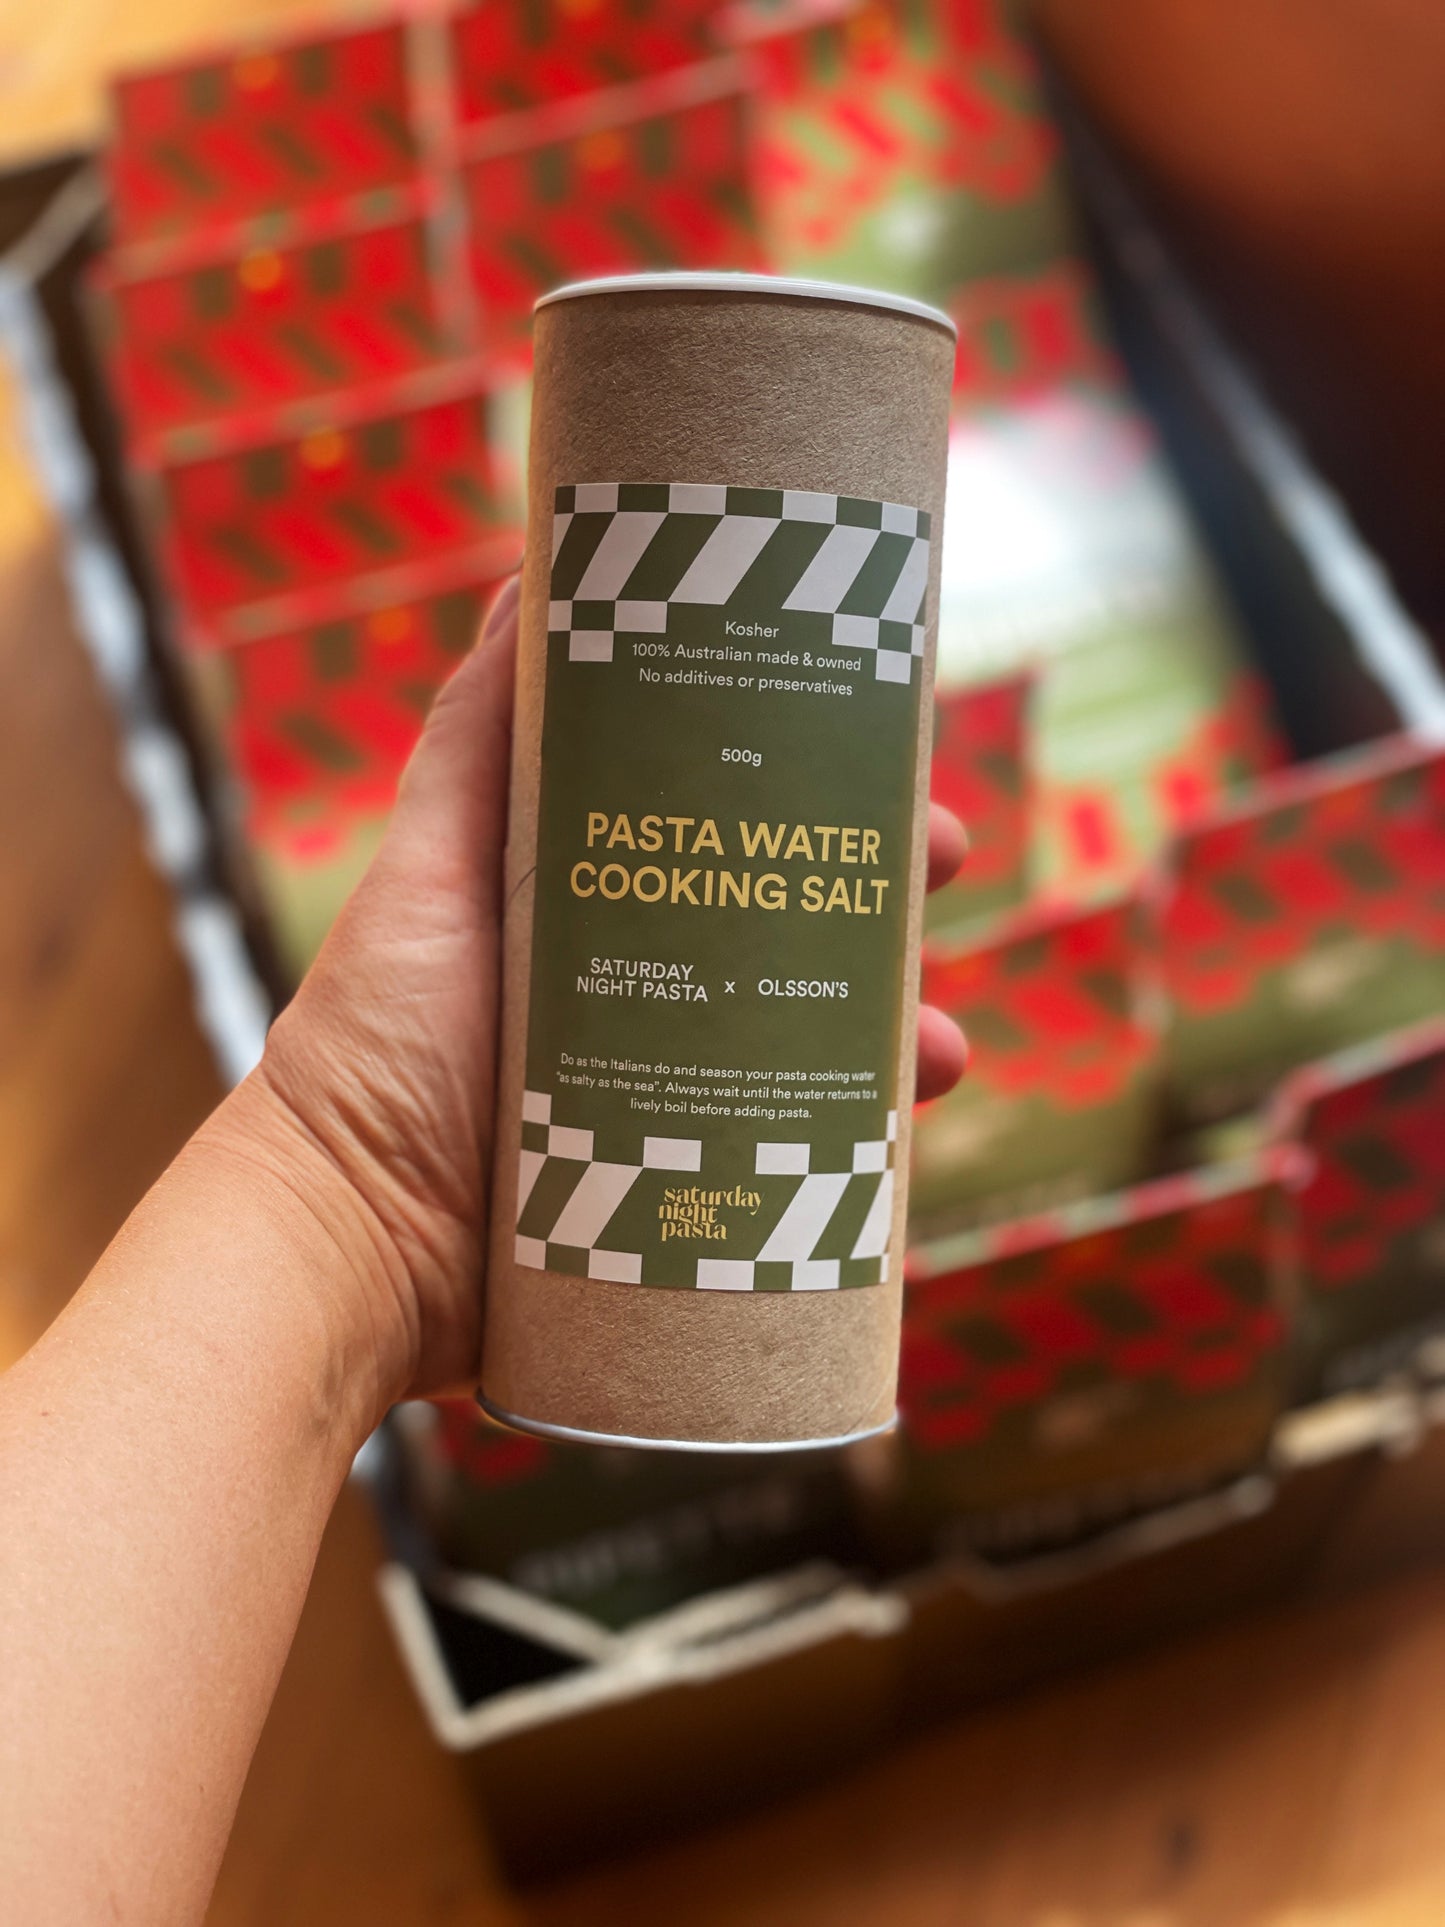 Pasta water cooking salt